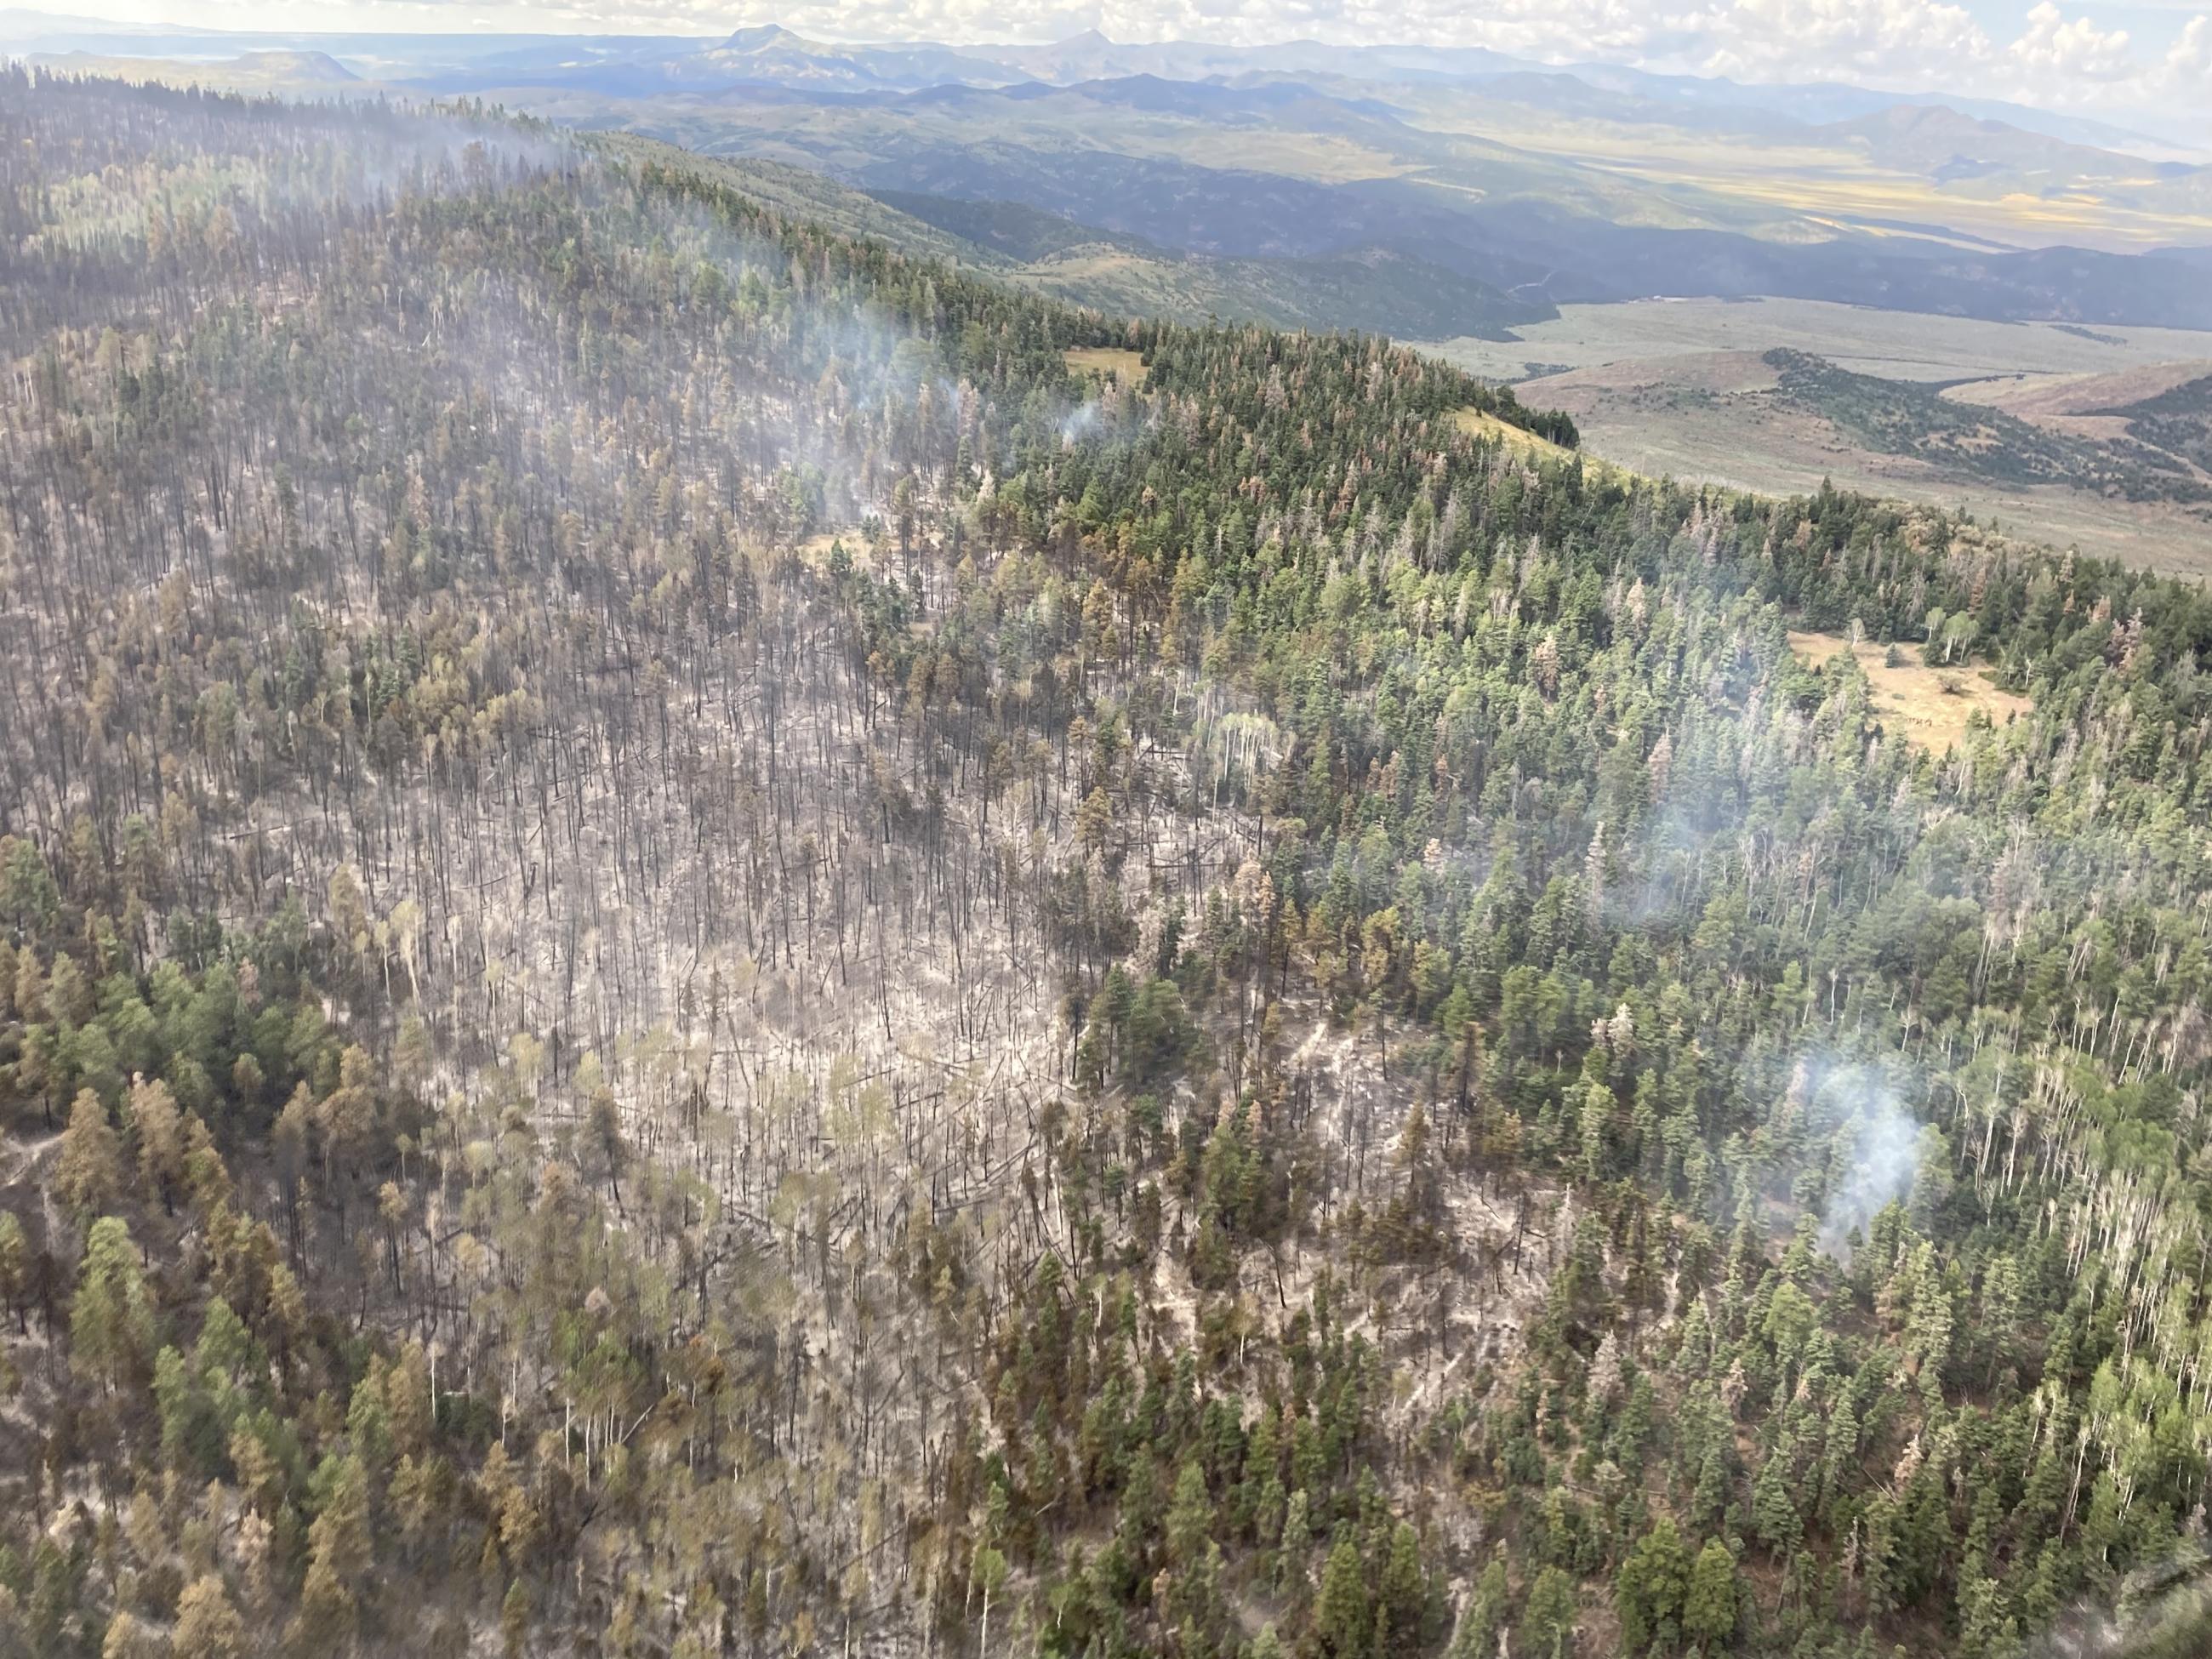 Smoldering fire behavior along ridge with trees